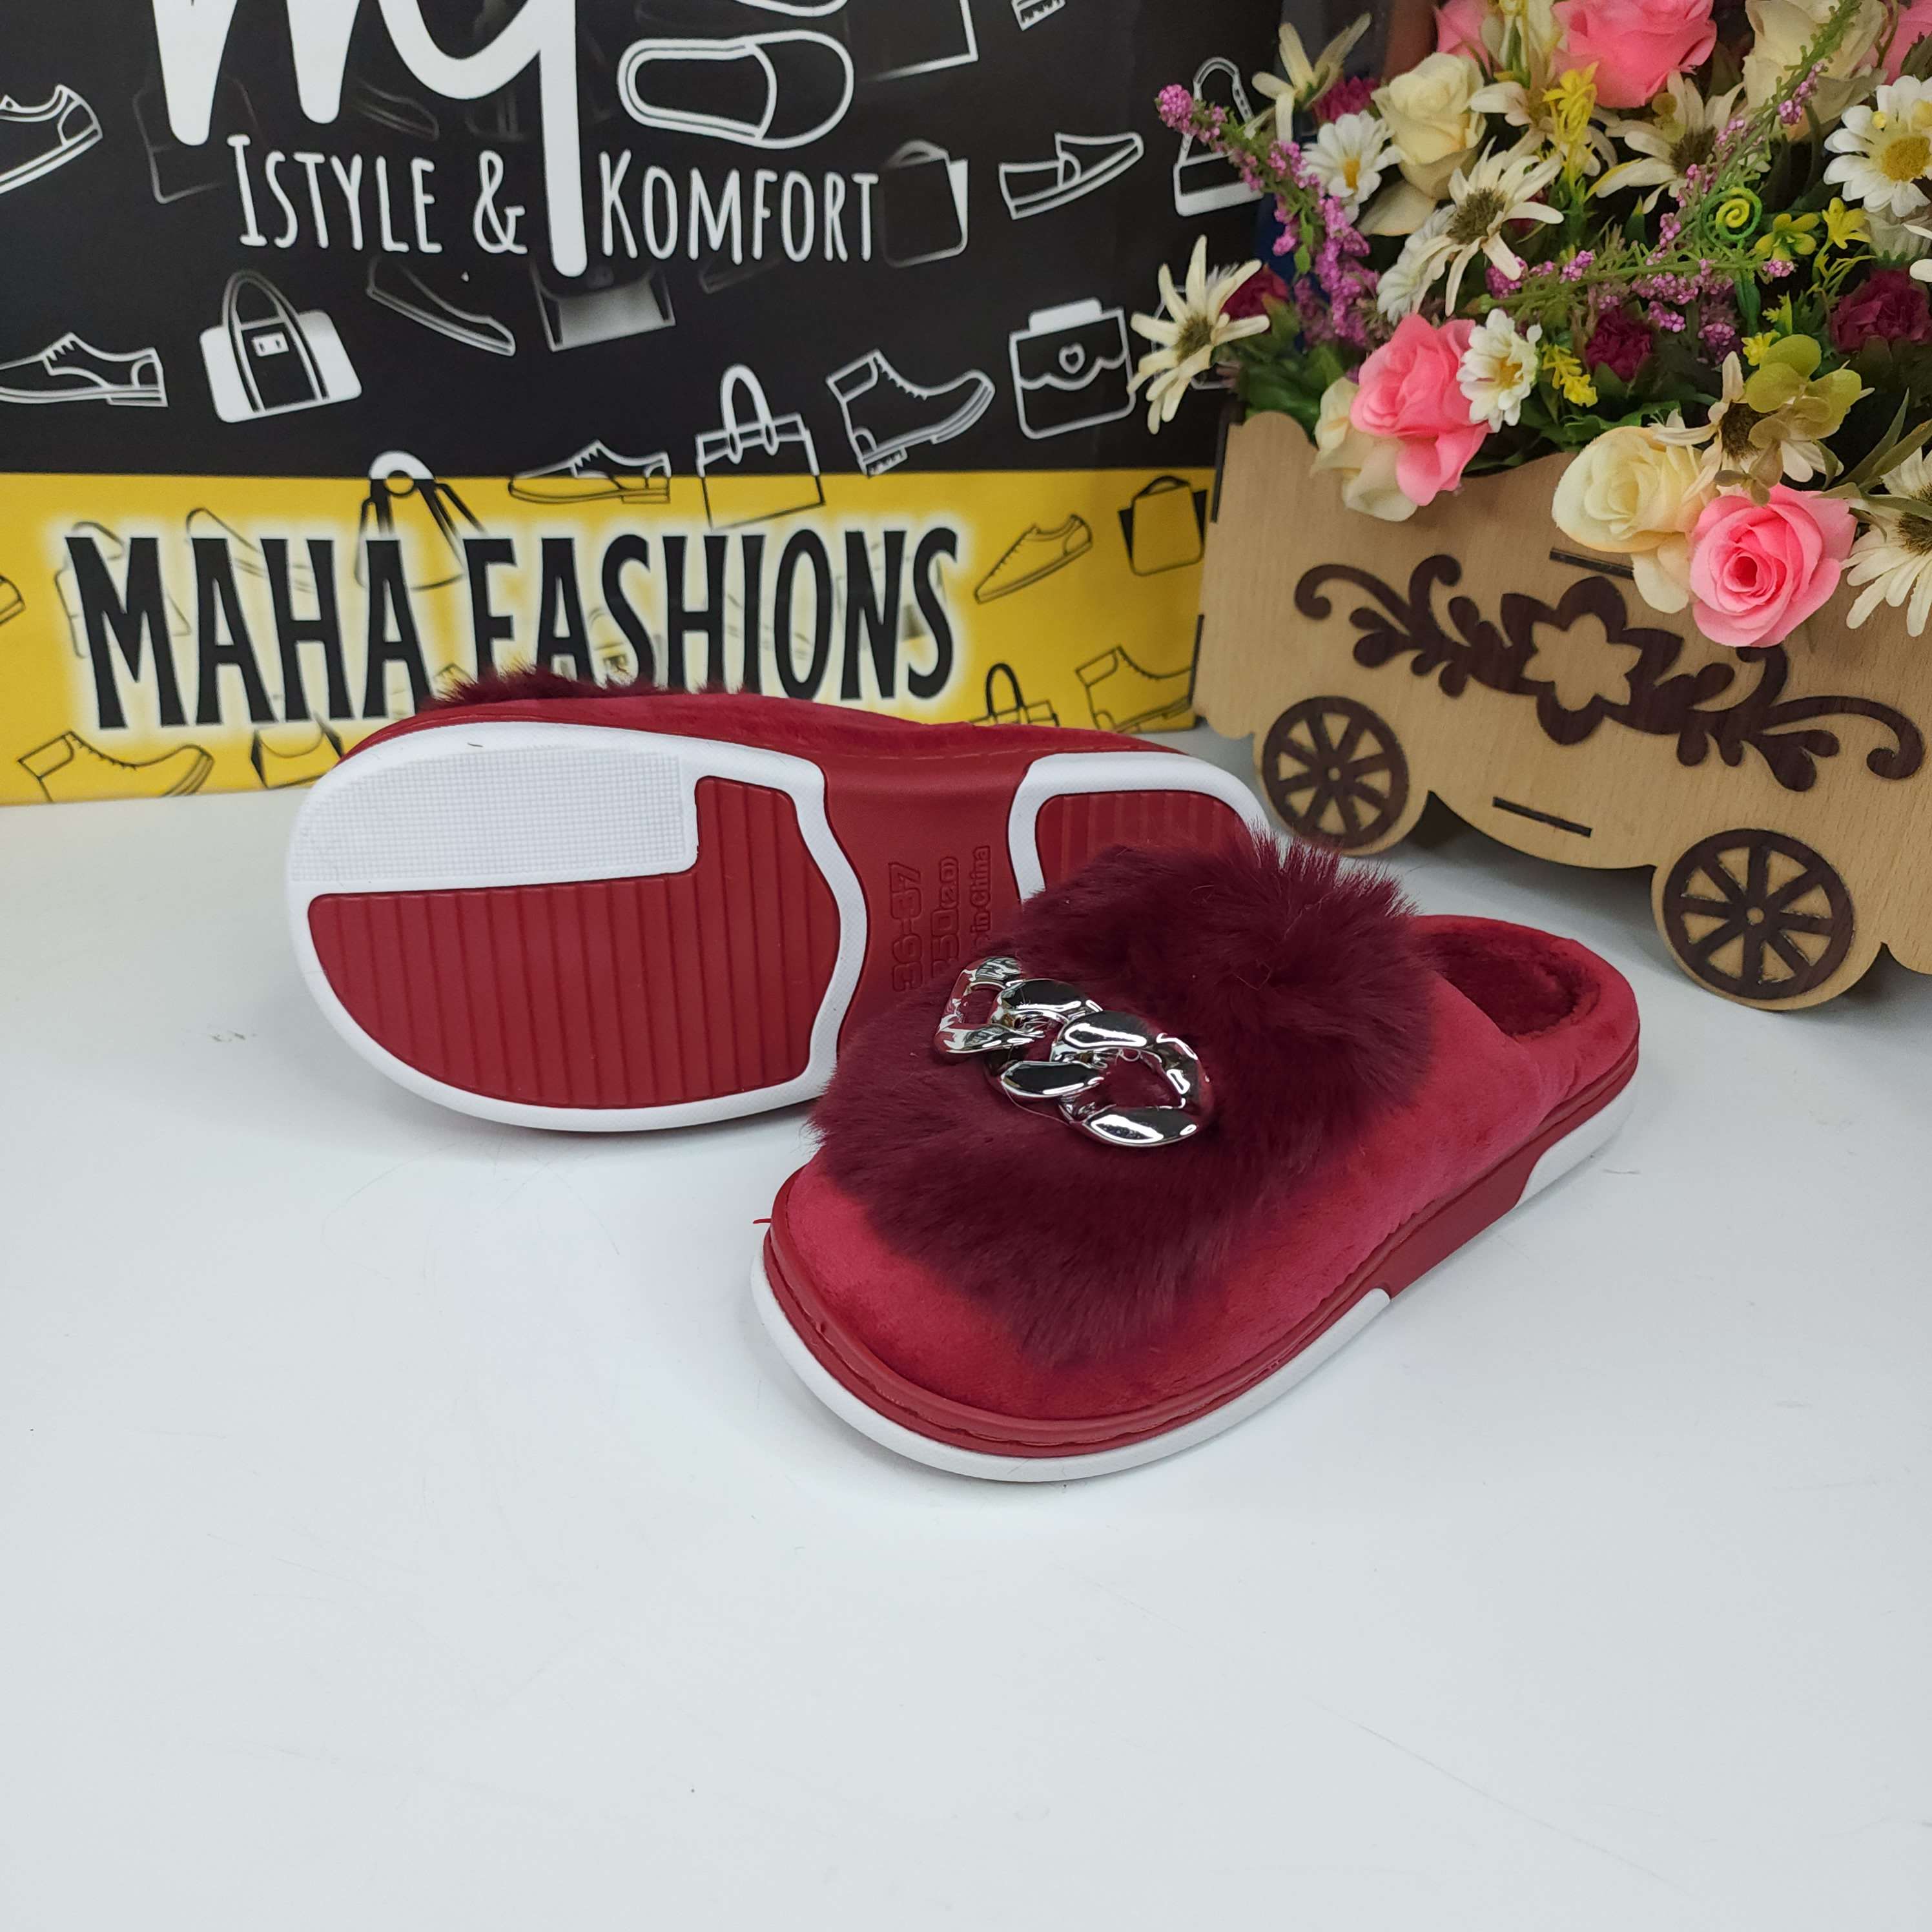 Maroon Fur Mules - Maha fashions -  